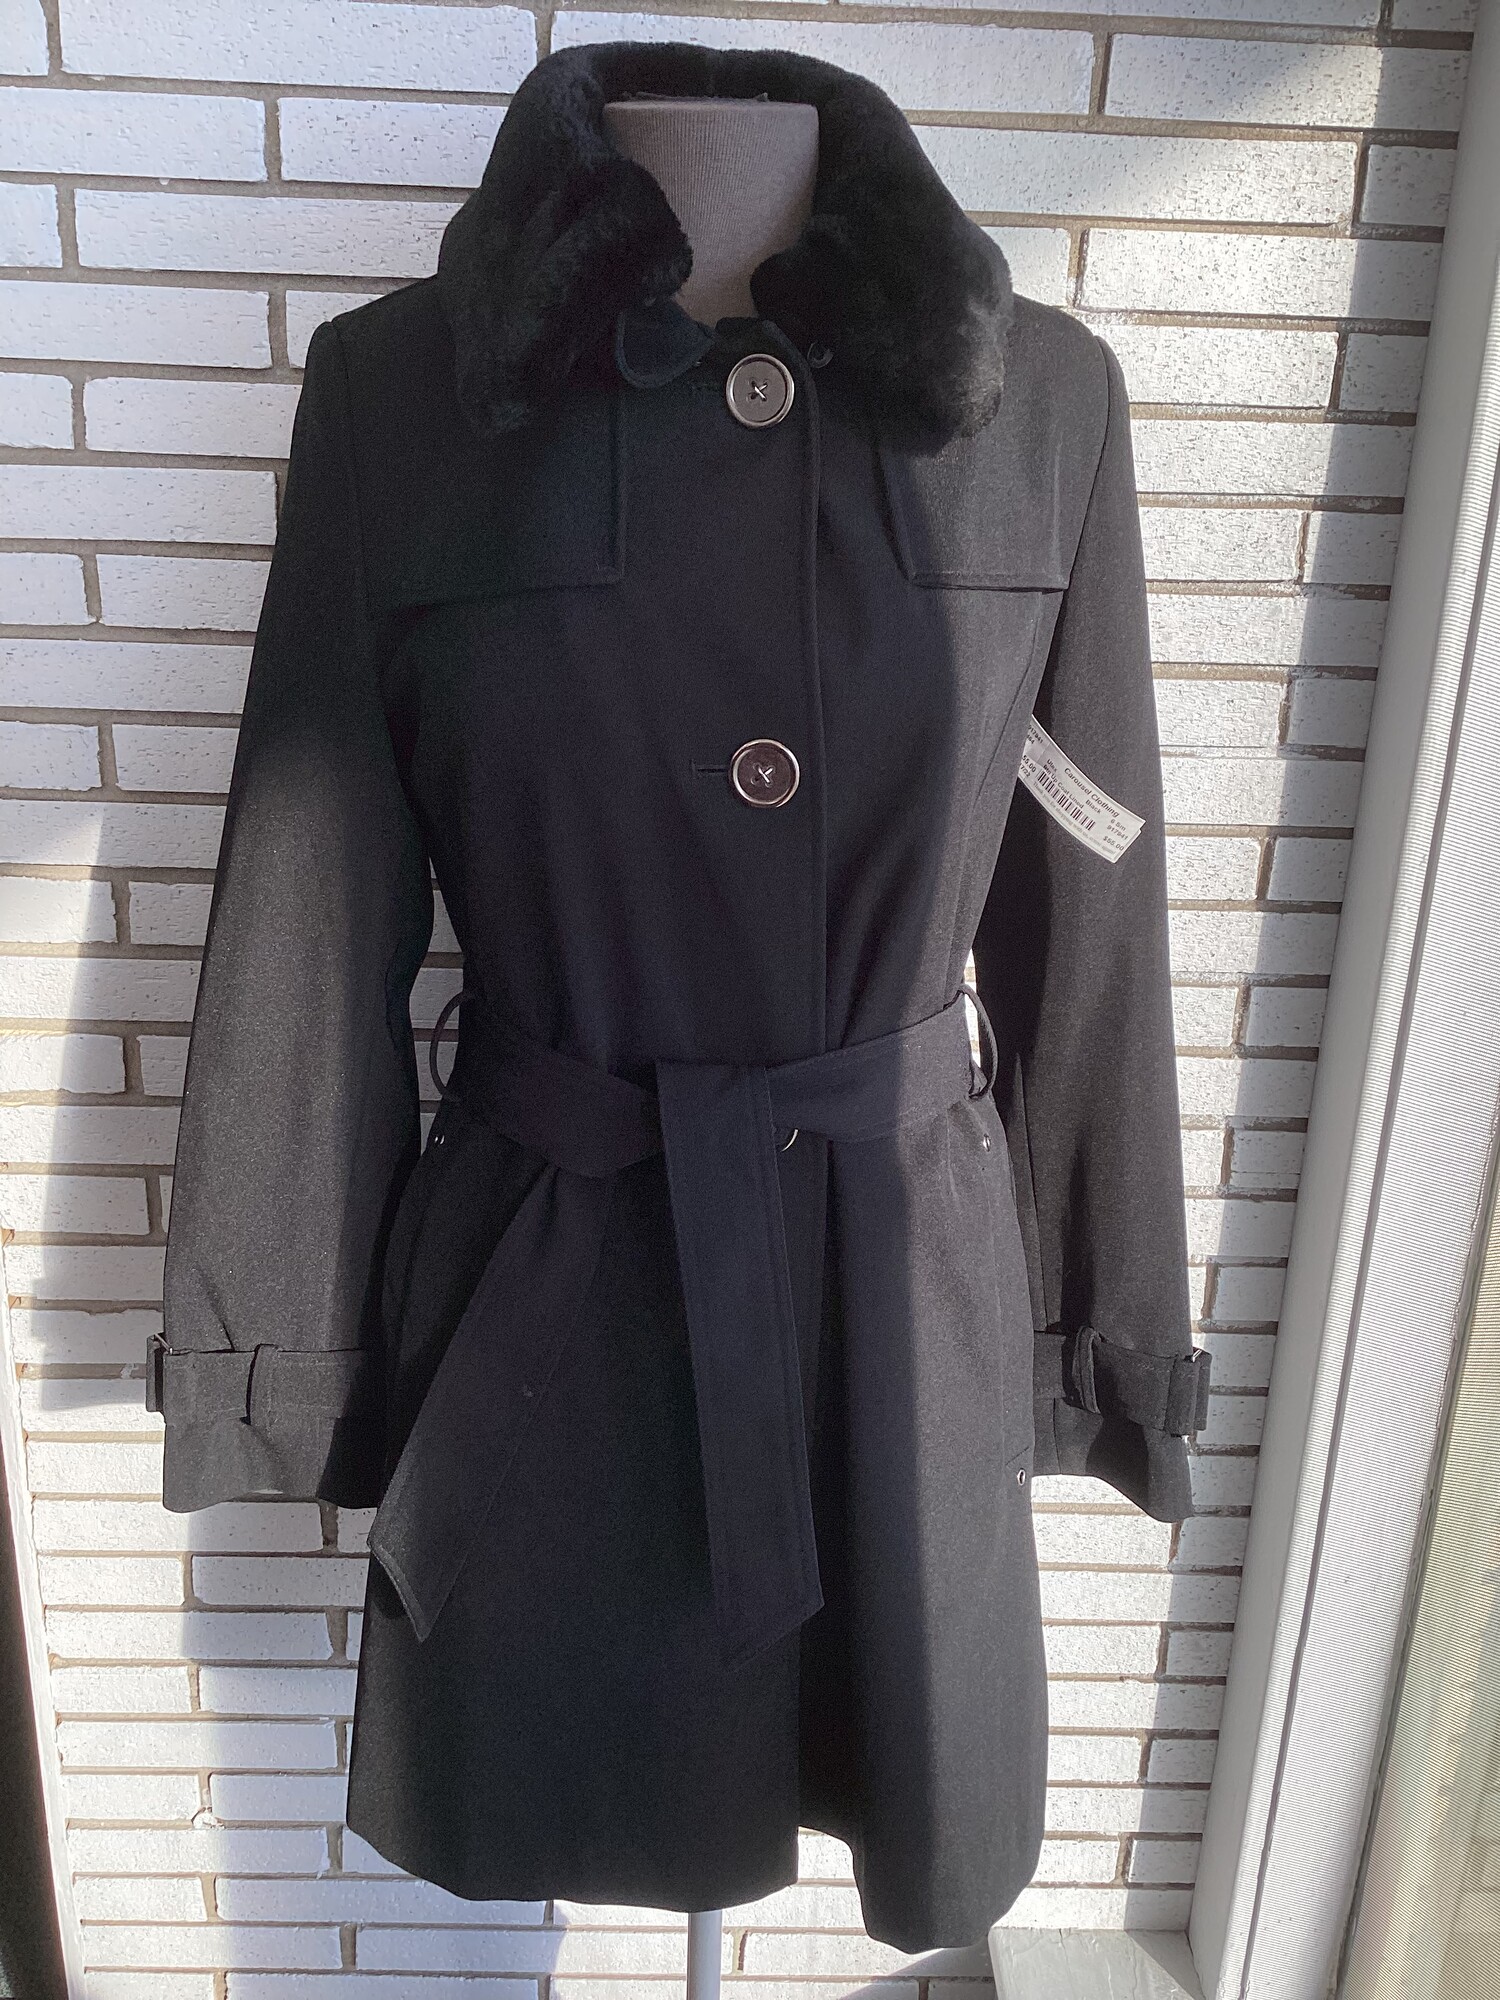 Btn Up Coat Lined, Black, Size: 6 Sm